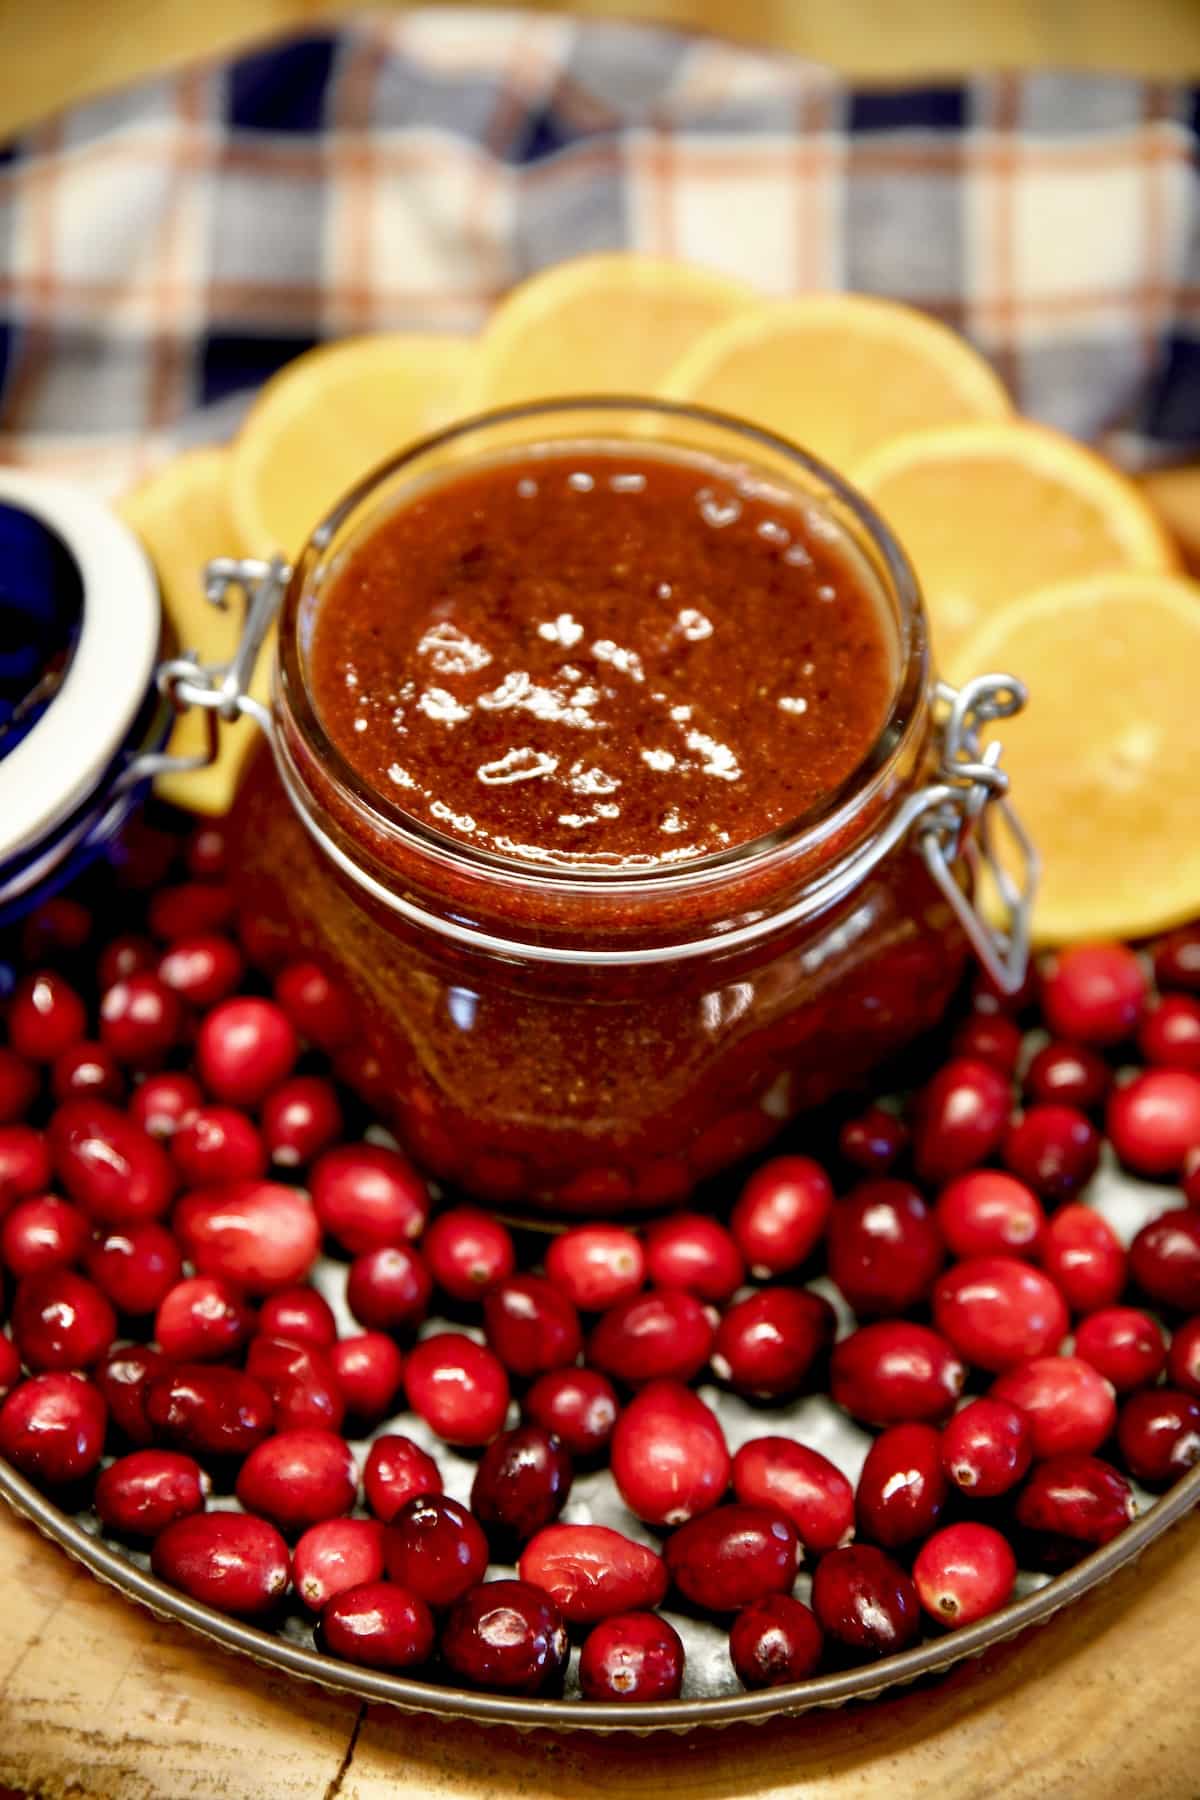 Cranberry orange sauce in a jar, orange slices and fresh cranberries on a platter.